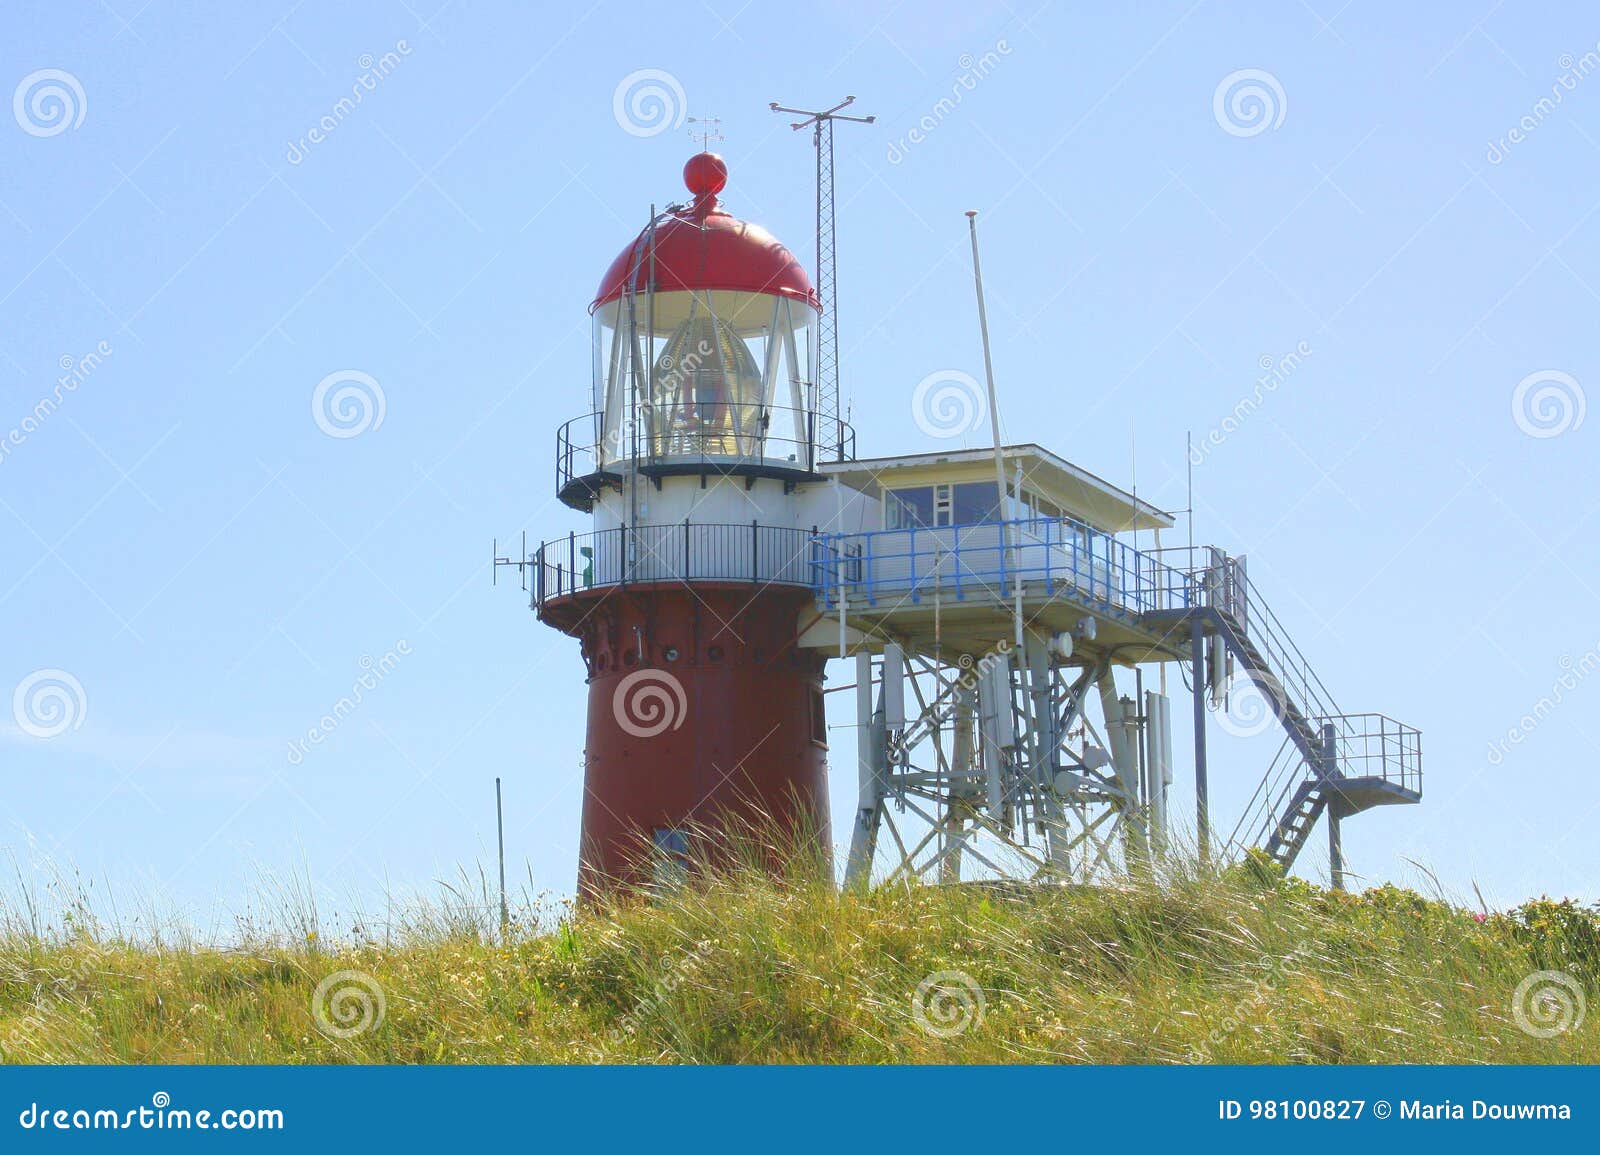 lighthouse of vlieland